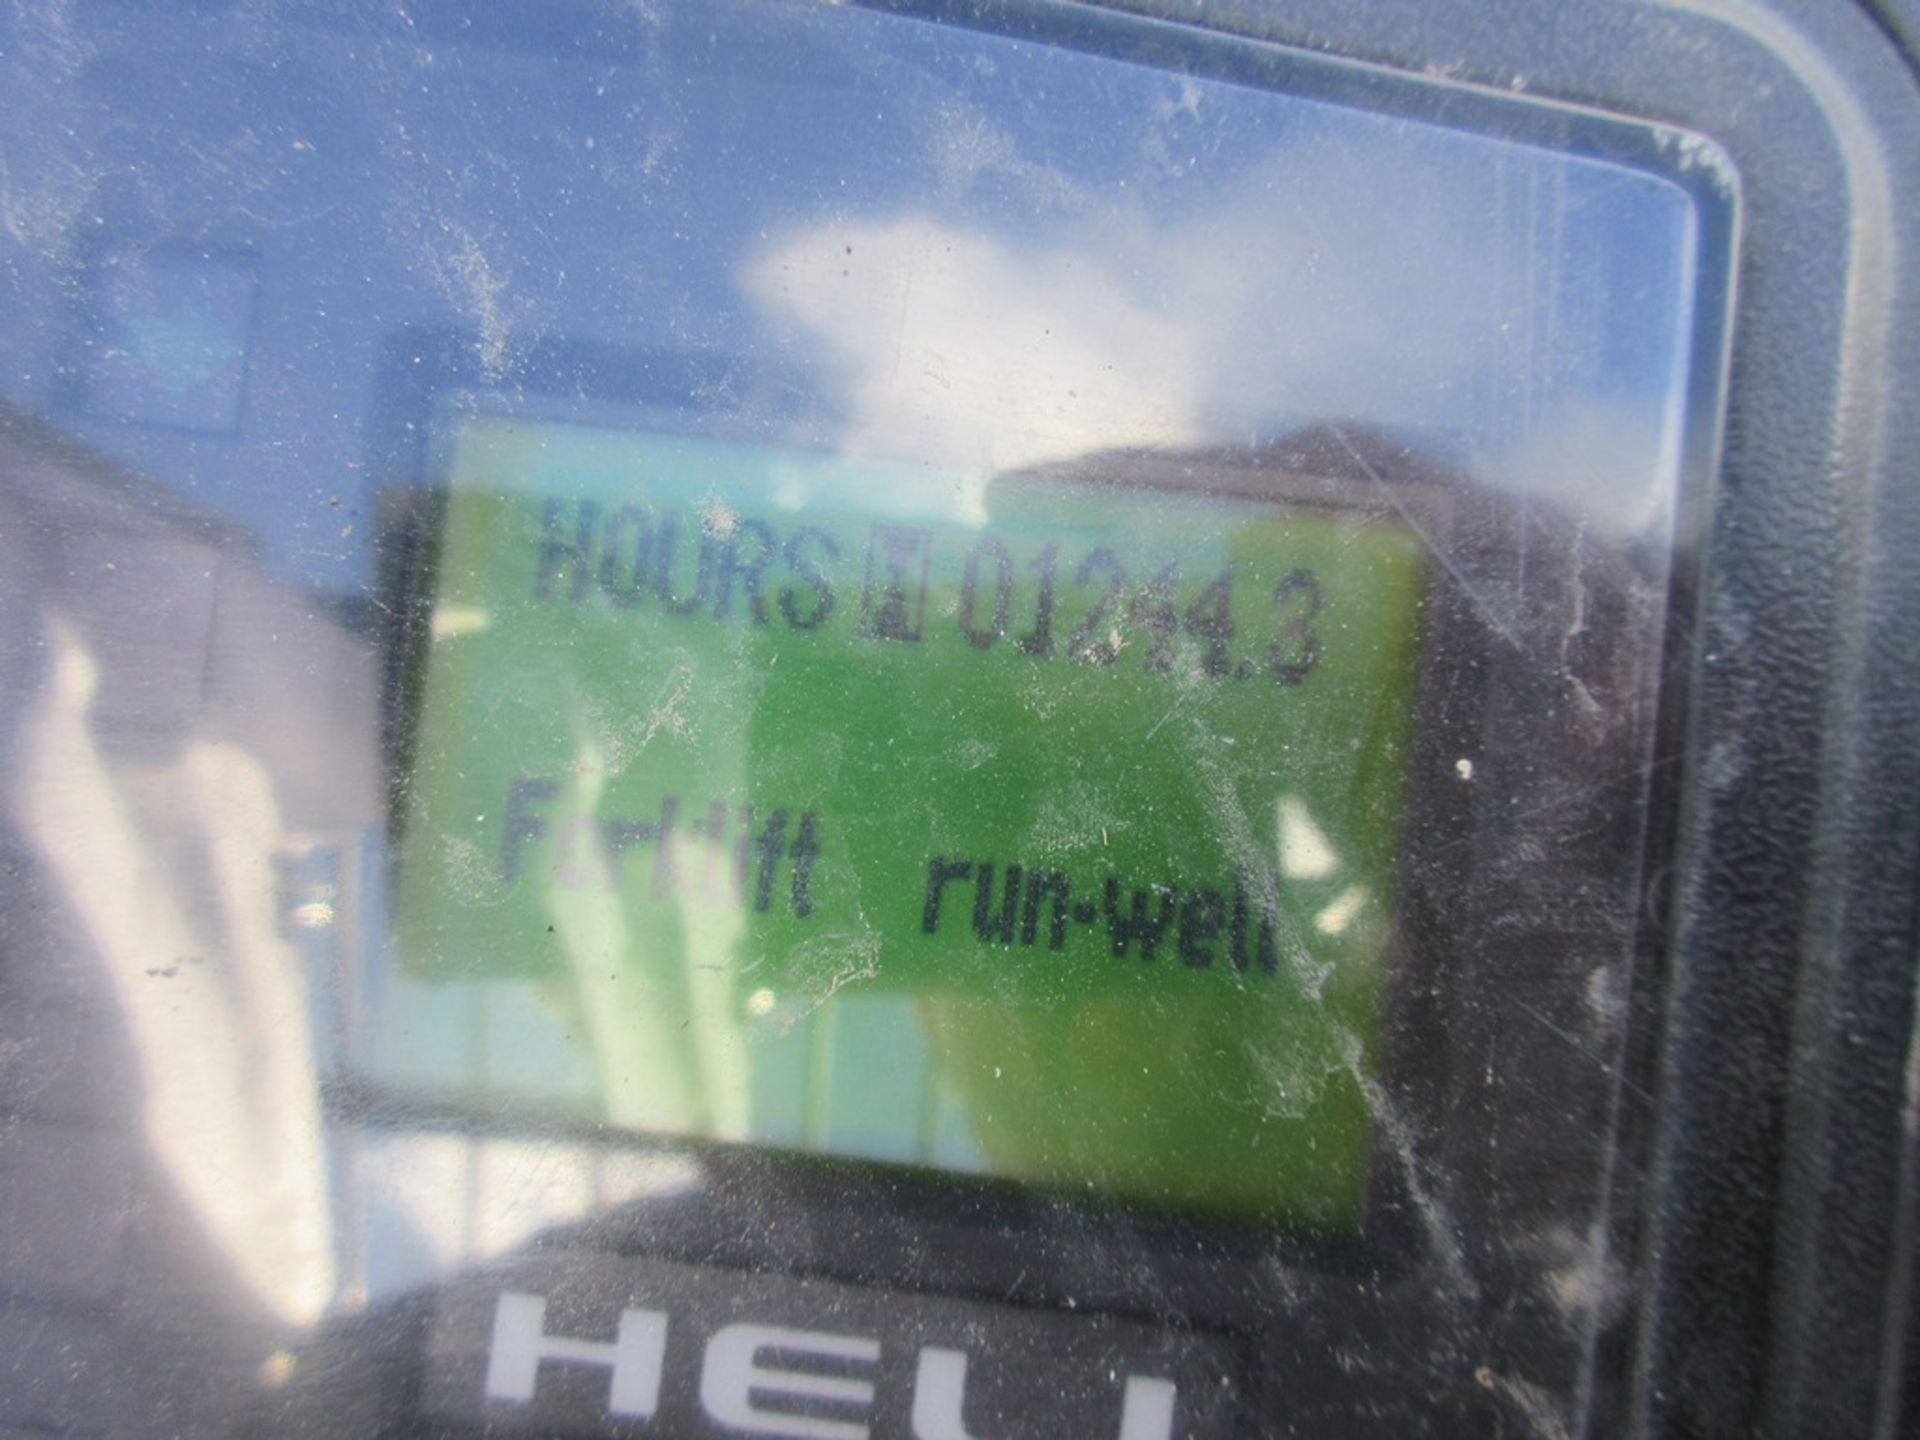 Heli FG15G LPG ride-on dual mast forklift truck (2012) - Image 10 of 12